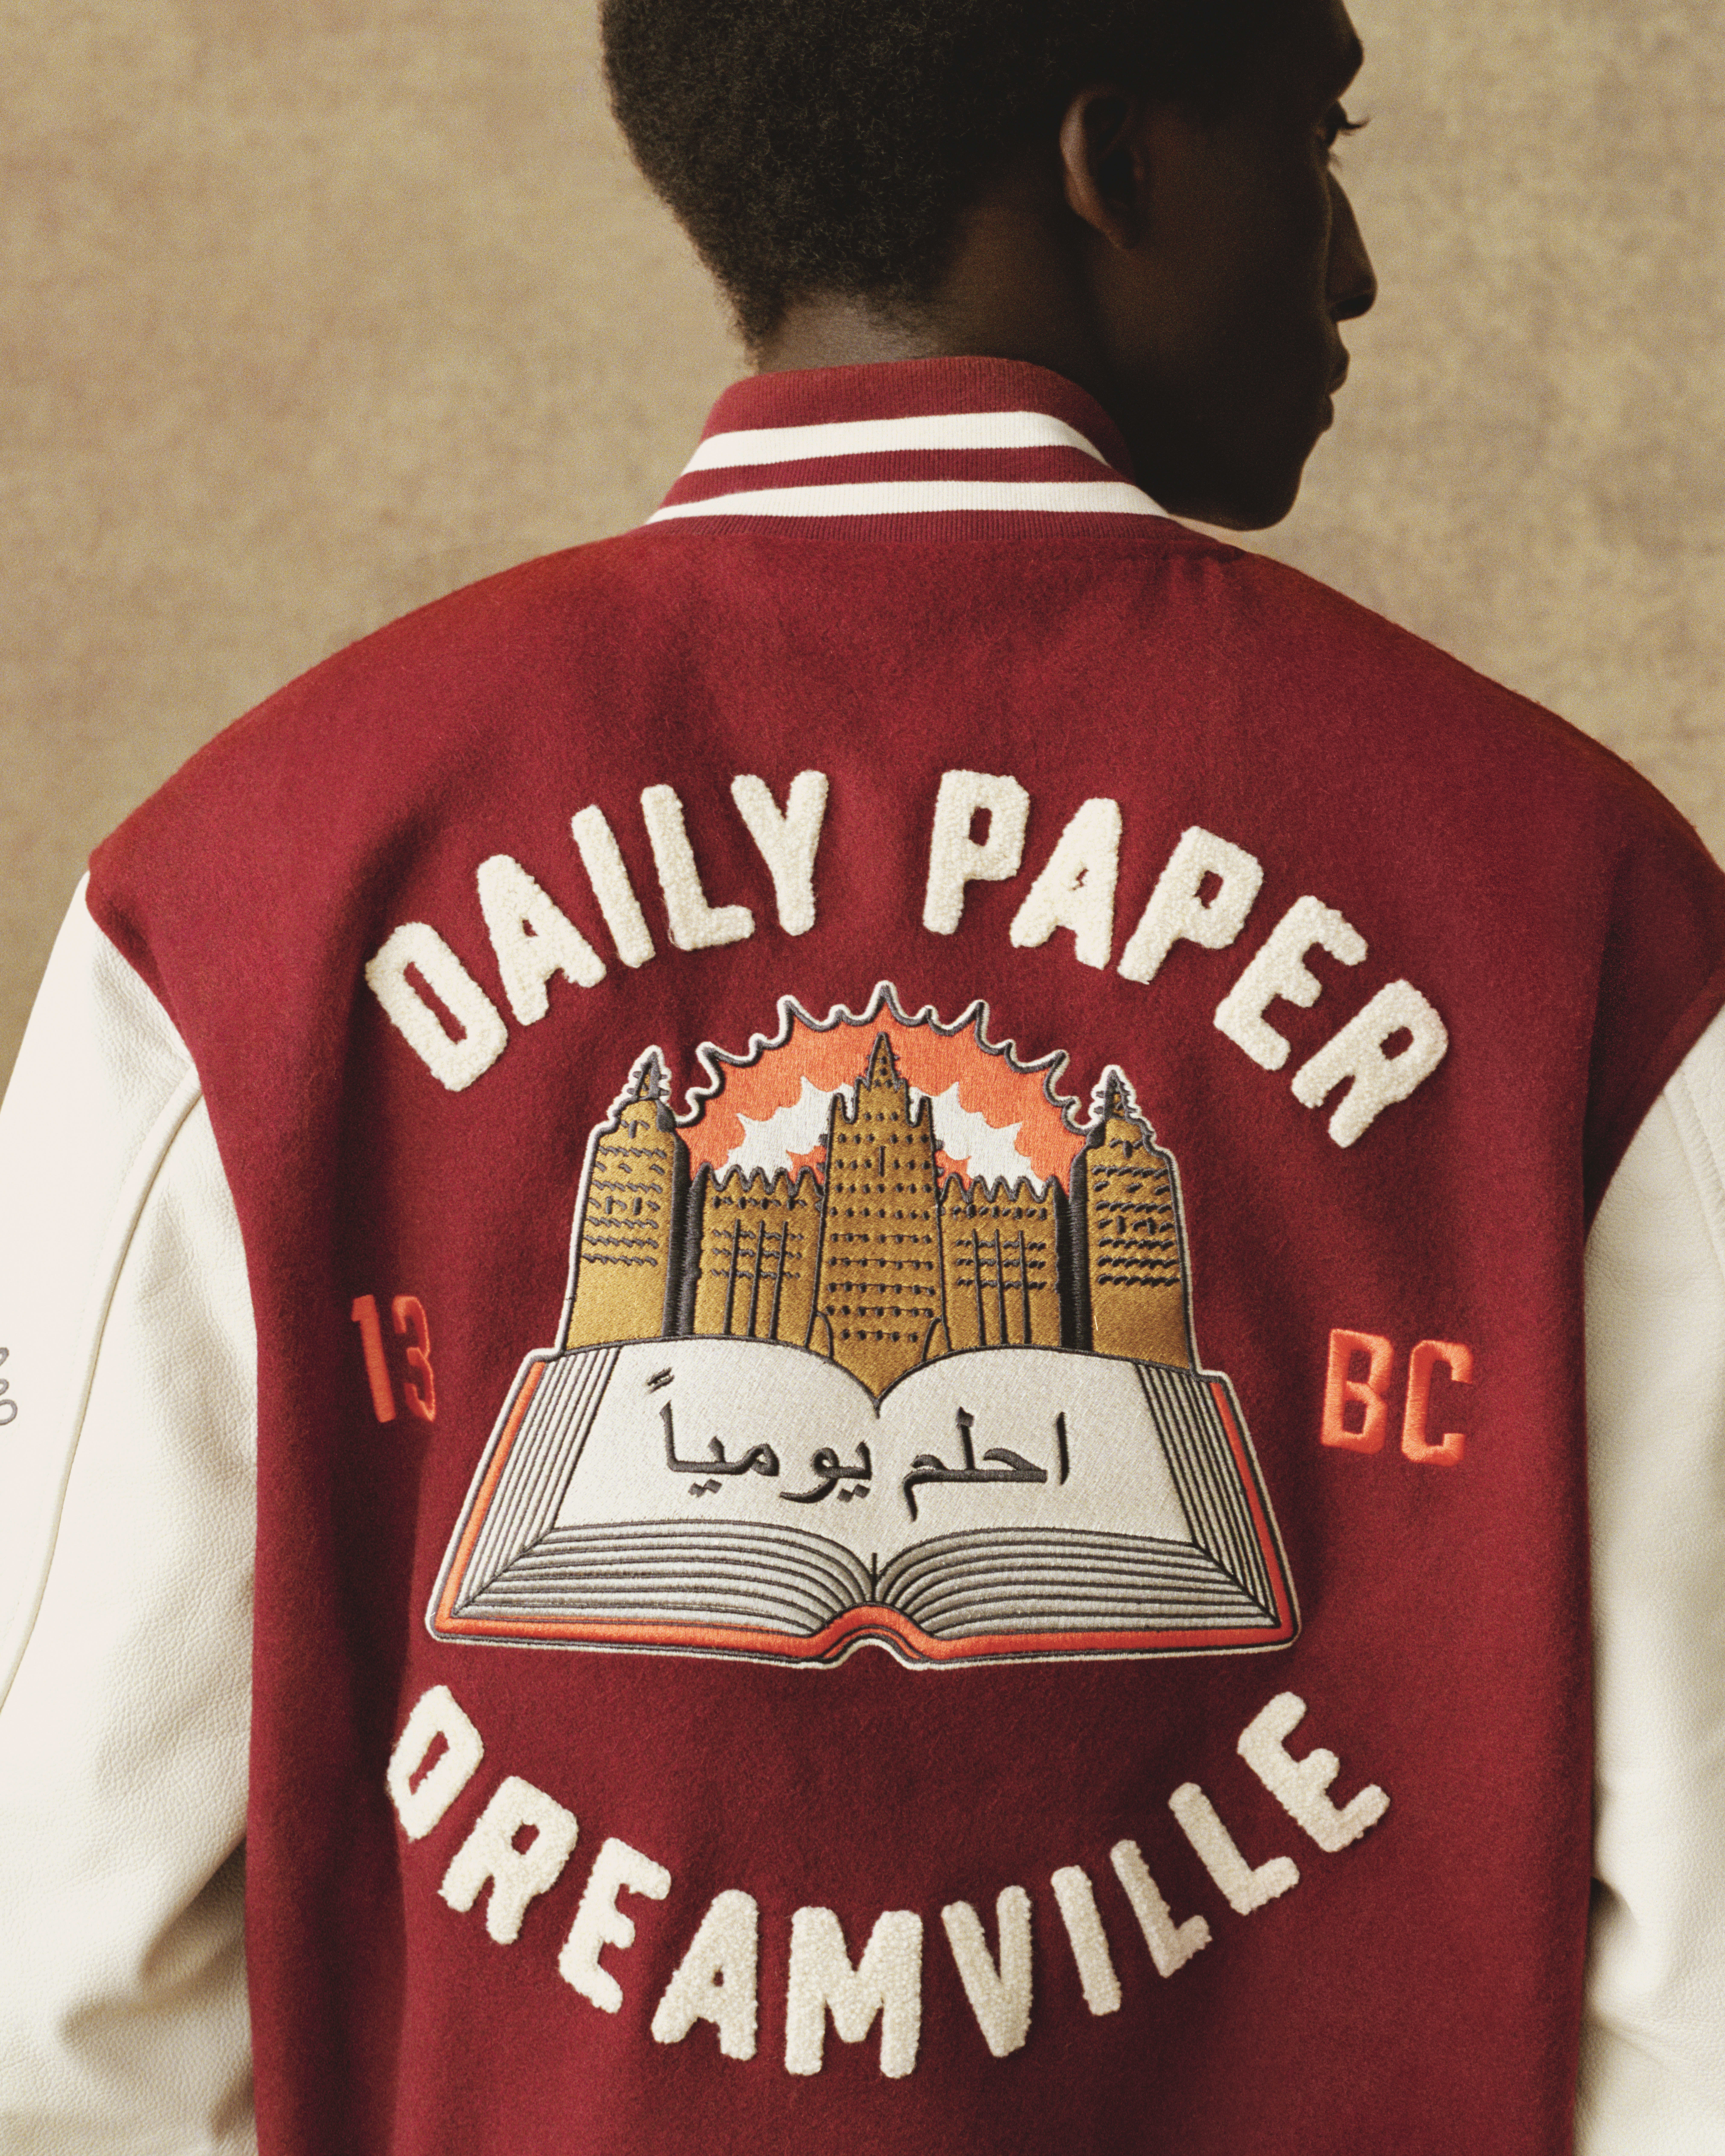 Dreamville jacket back is pictured